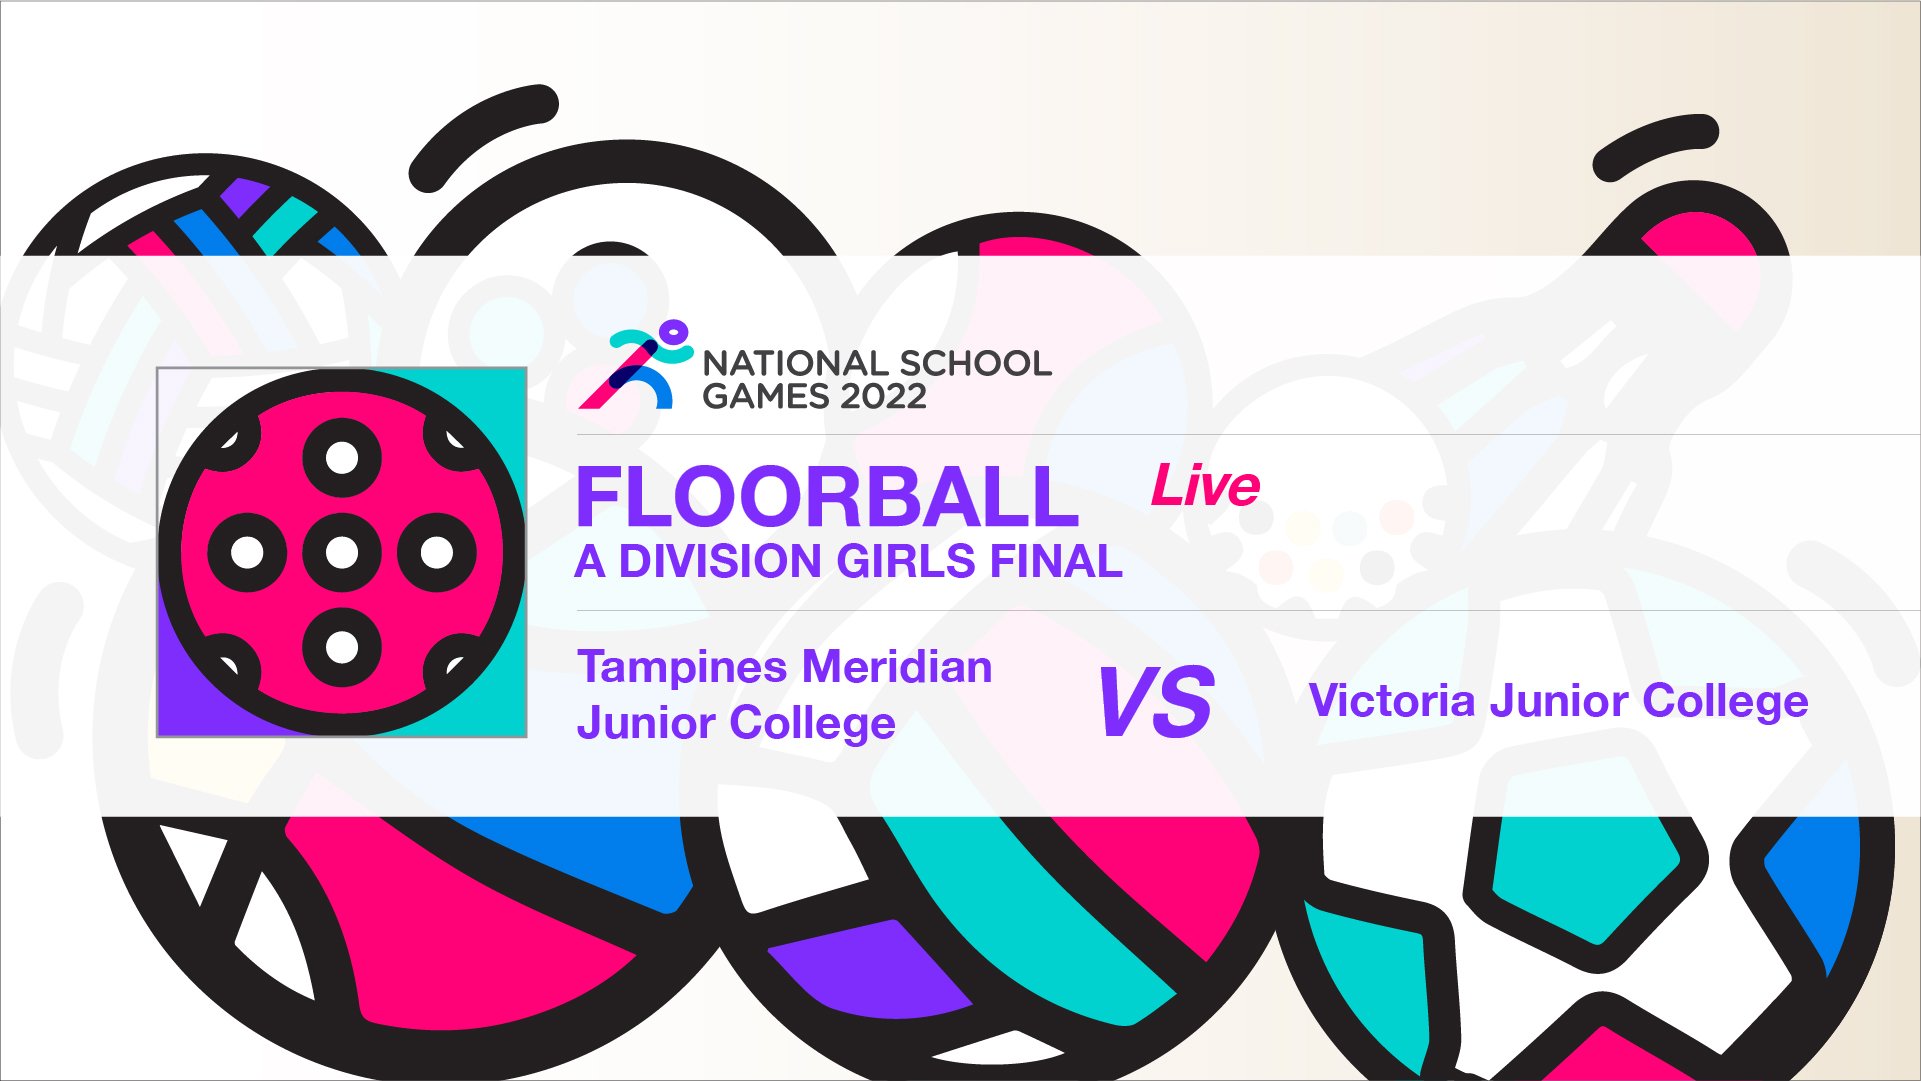 SSSC Floorball A Division Girls Final | Tampines Meridian Junior College vs Victoria Junior College